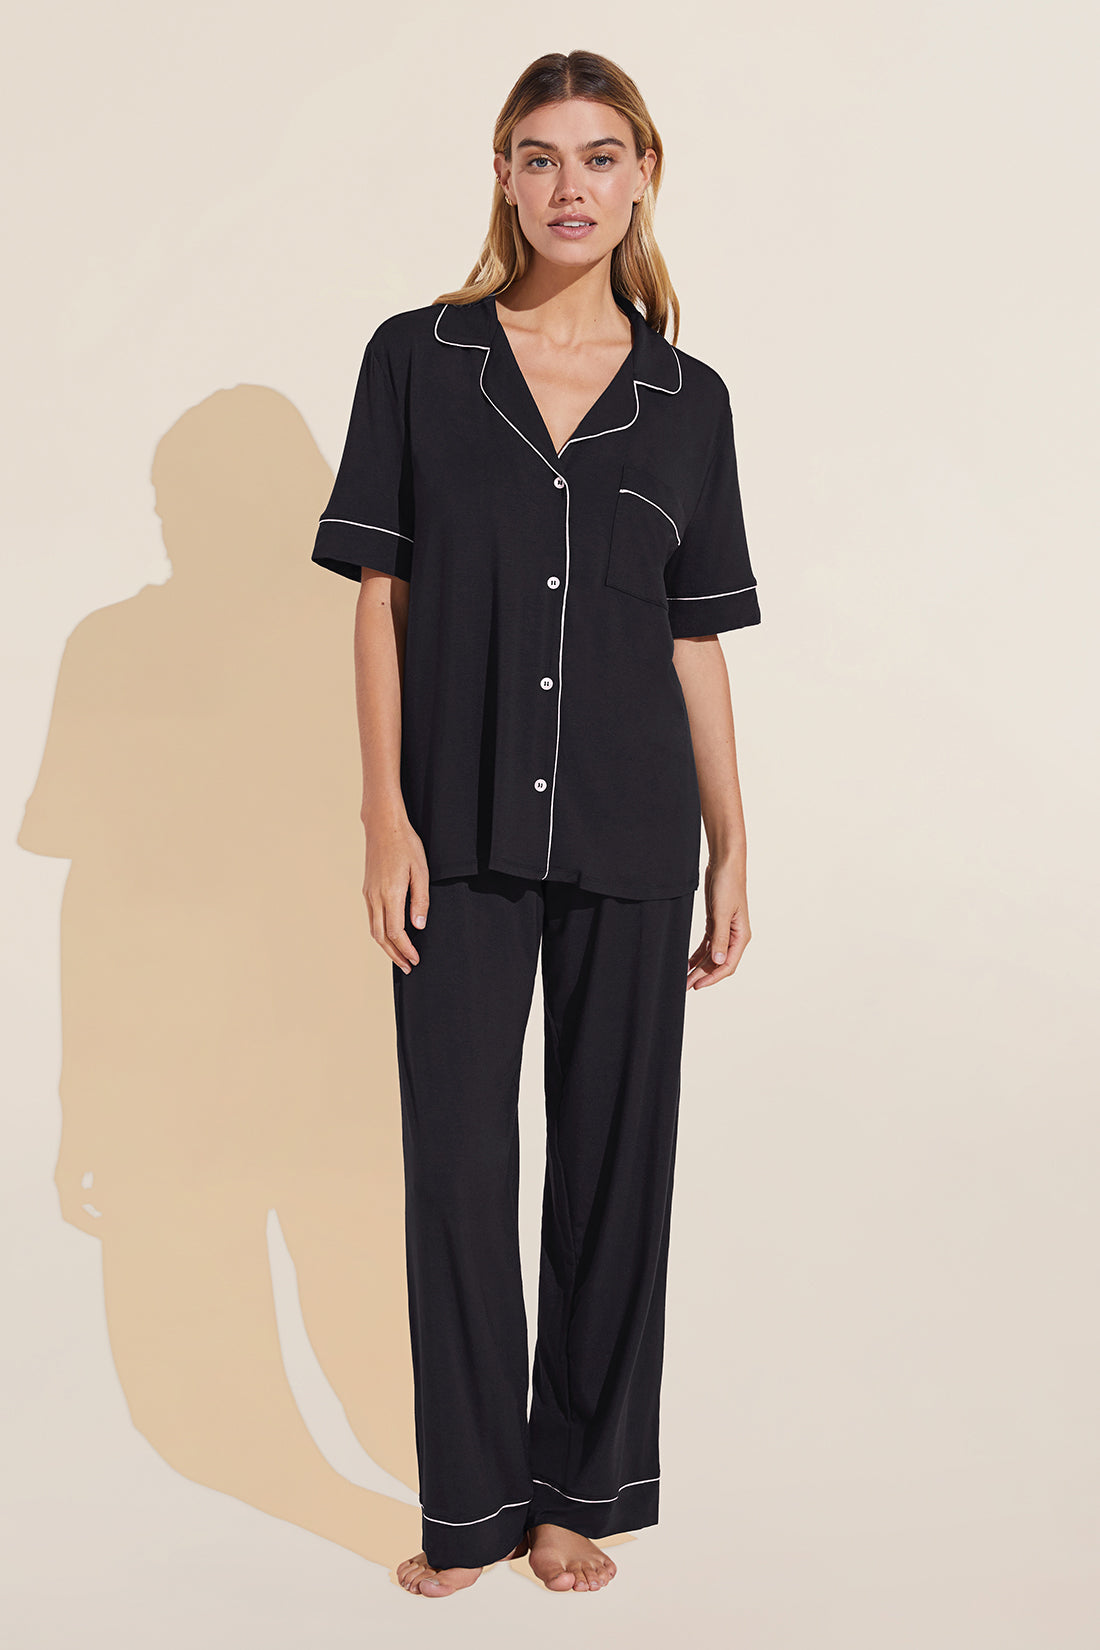 Mon Loungewear Classic Basic Style Black Modal Pajamas Set –